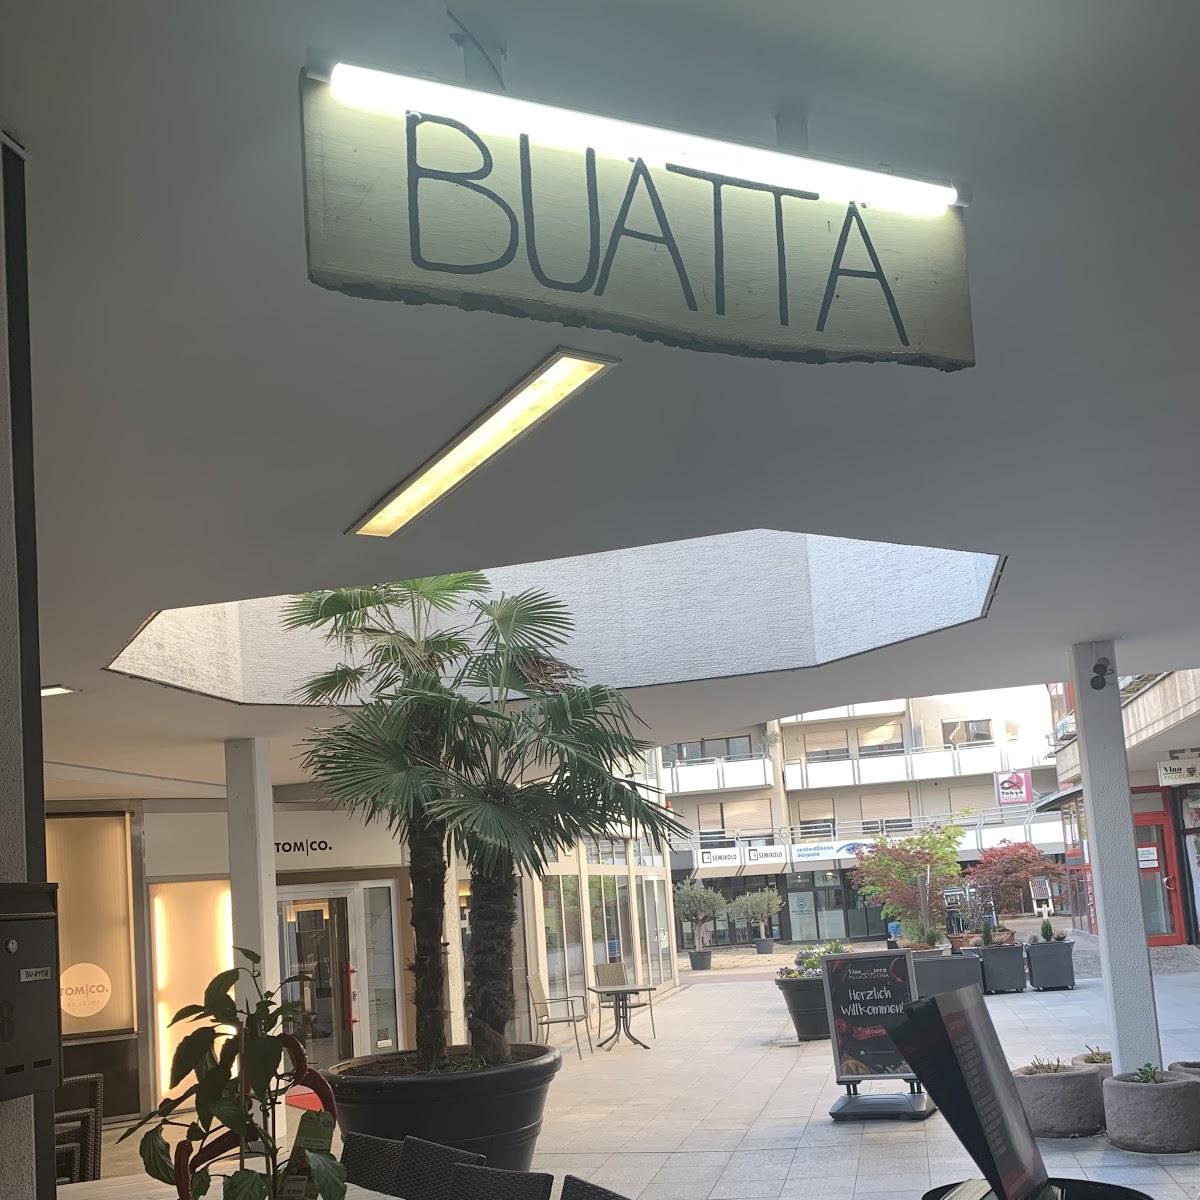 Restaurant "Pizzeria Buatta" in Mannheim